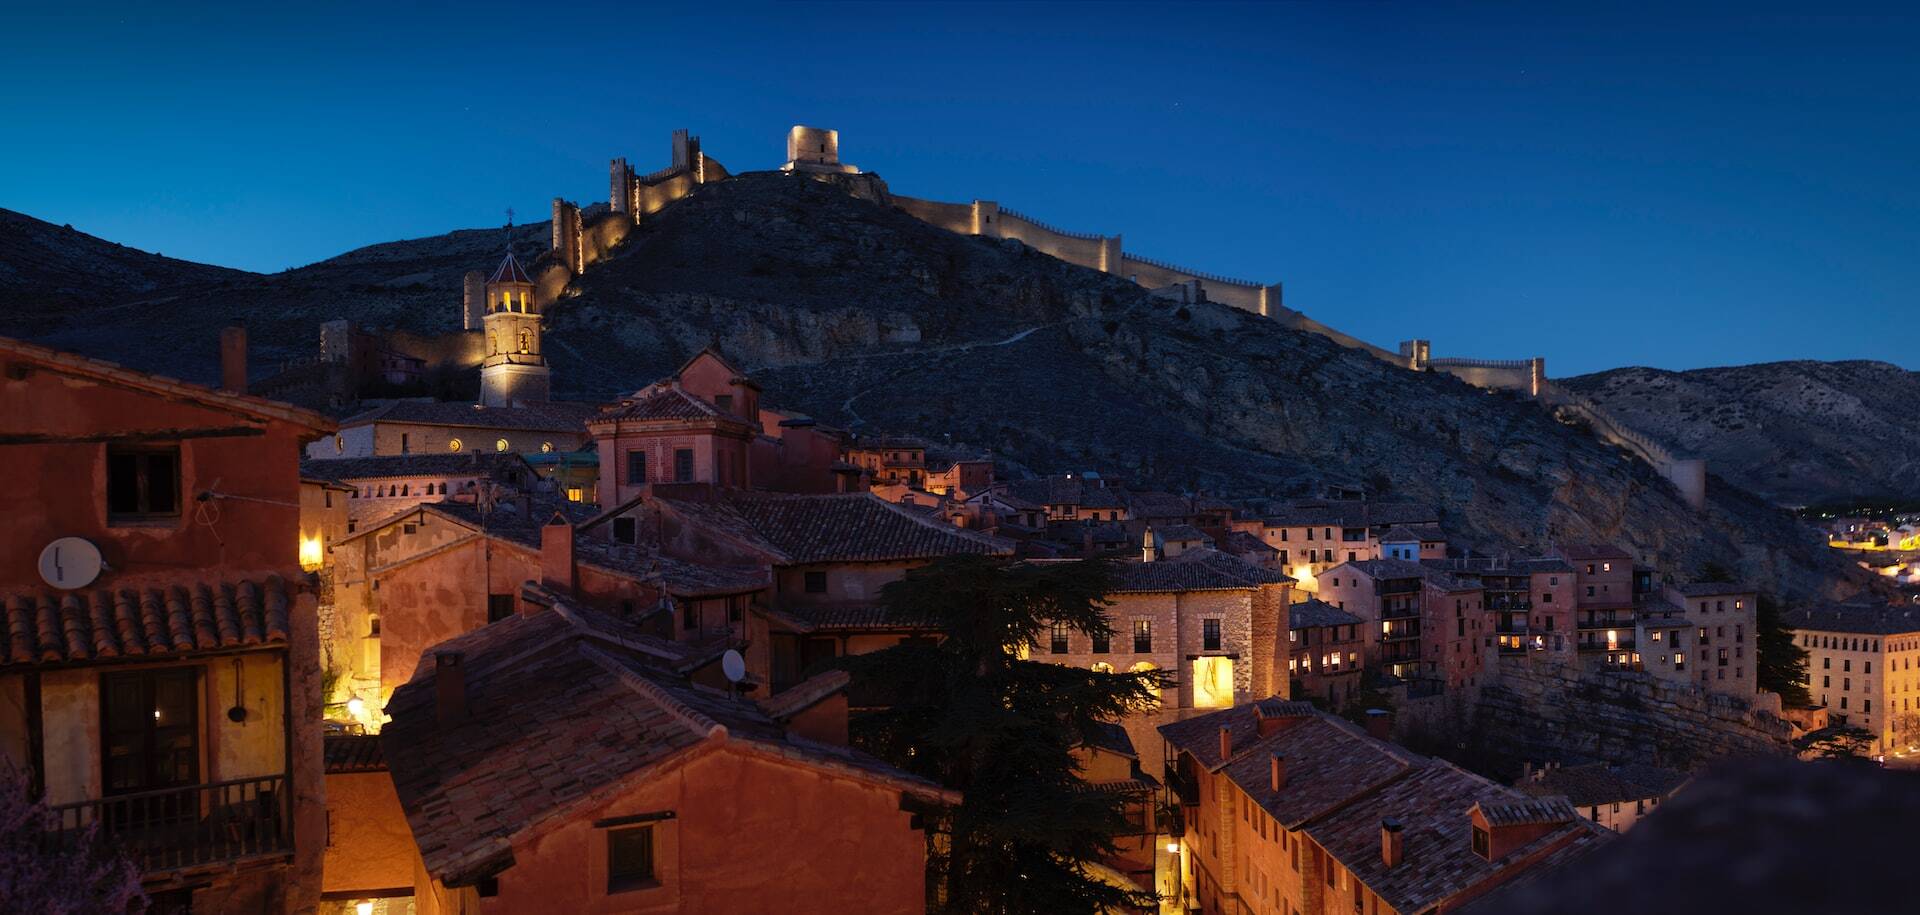 Where to stay in Albarracín, Teruel